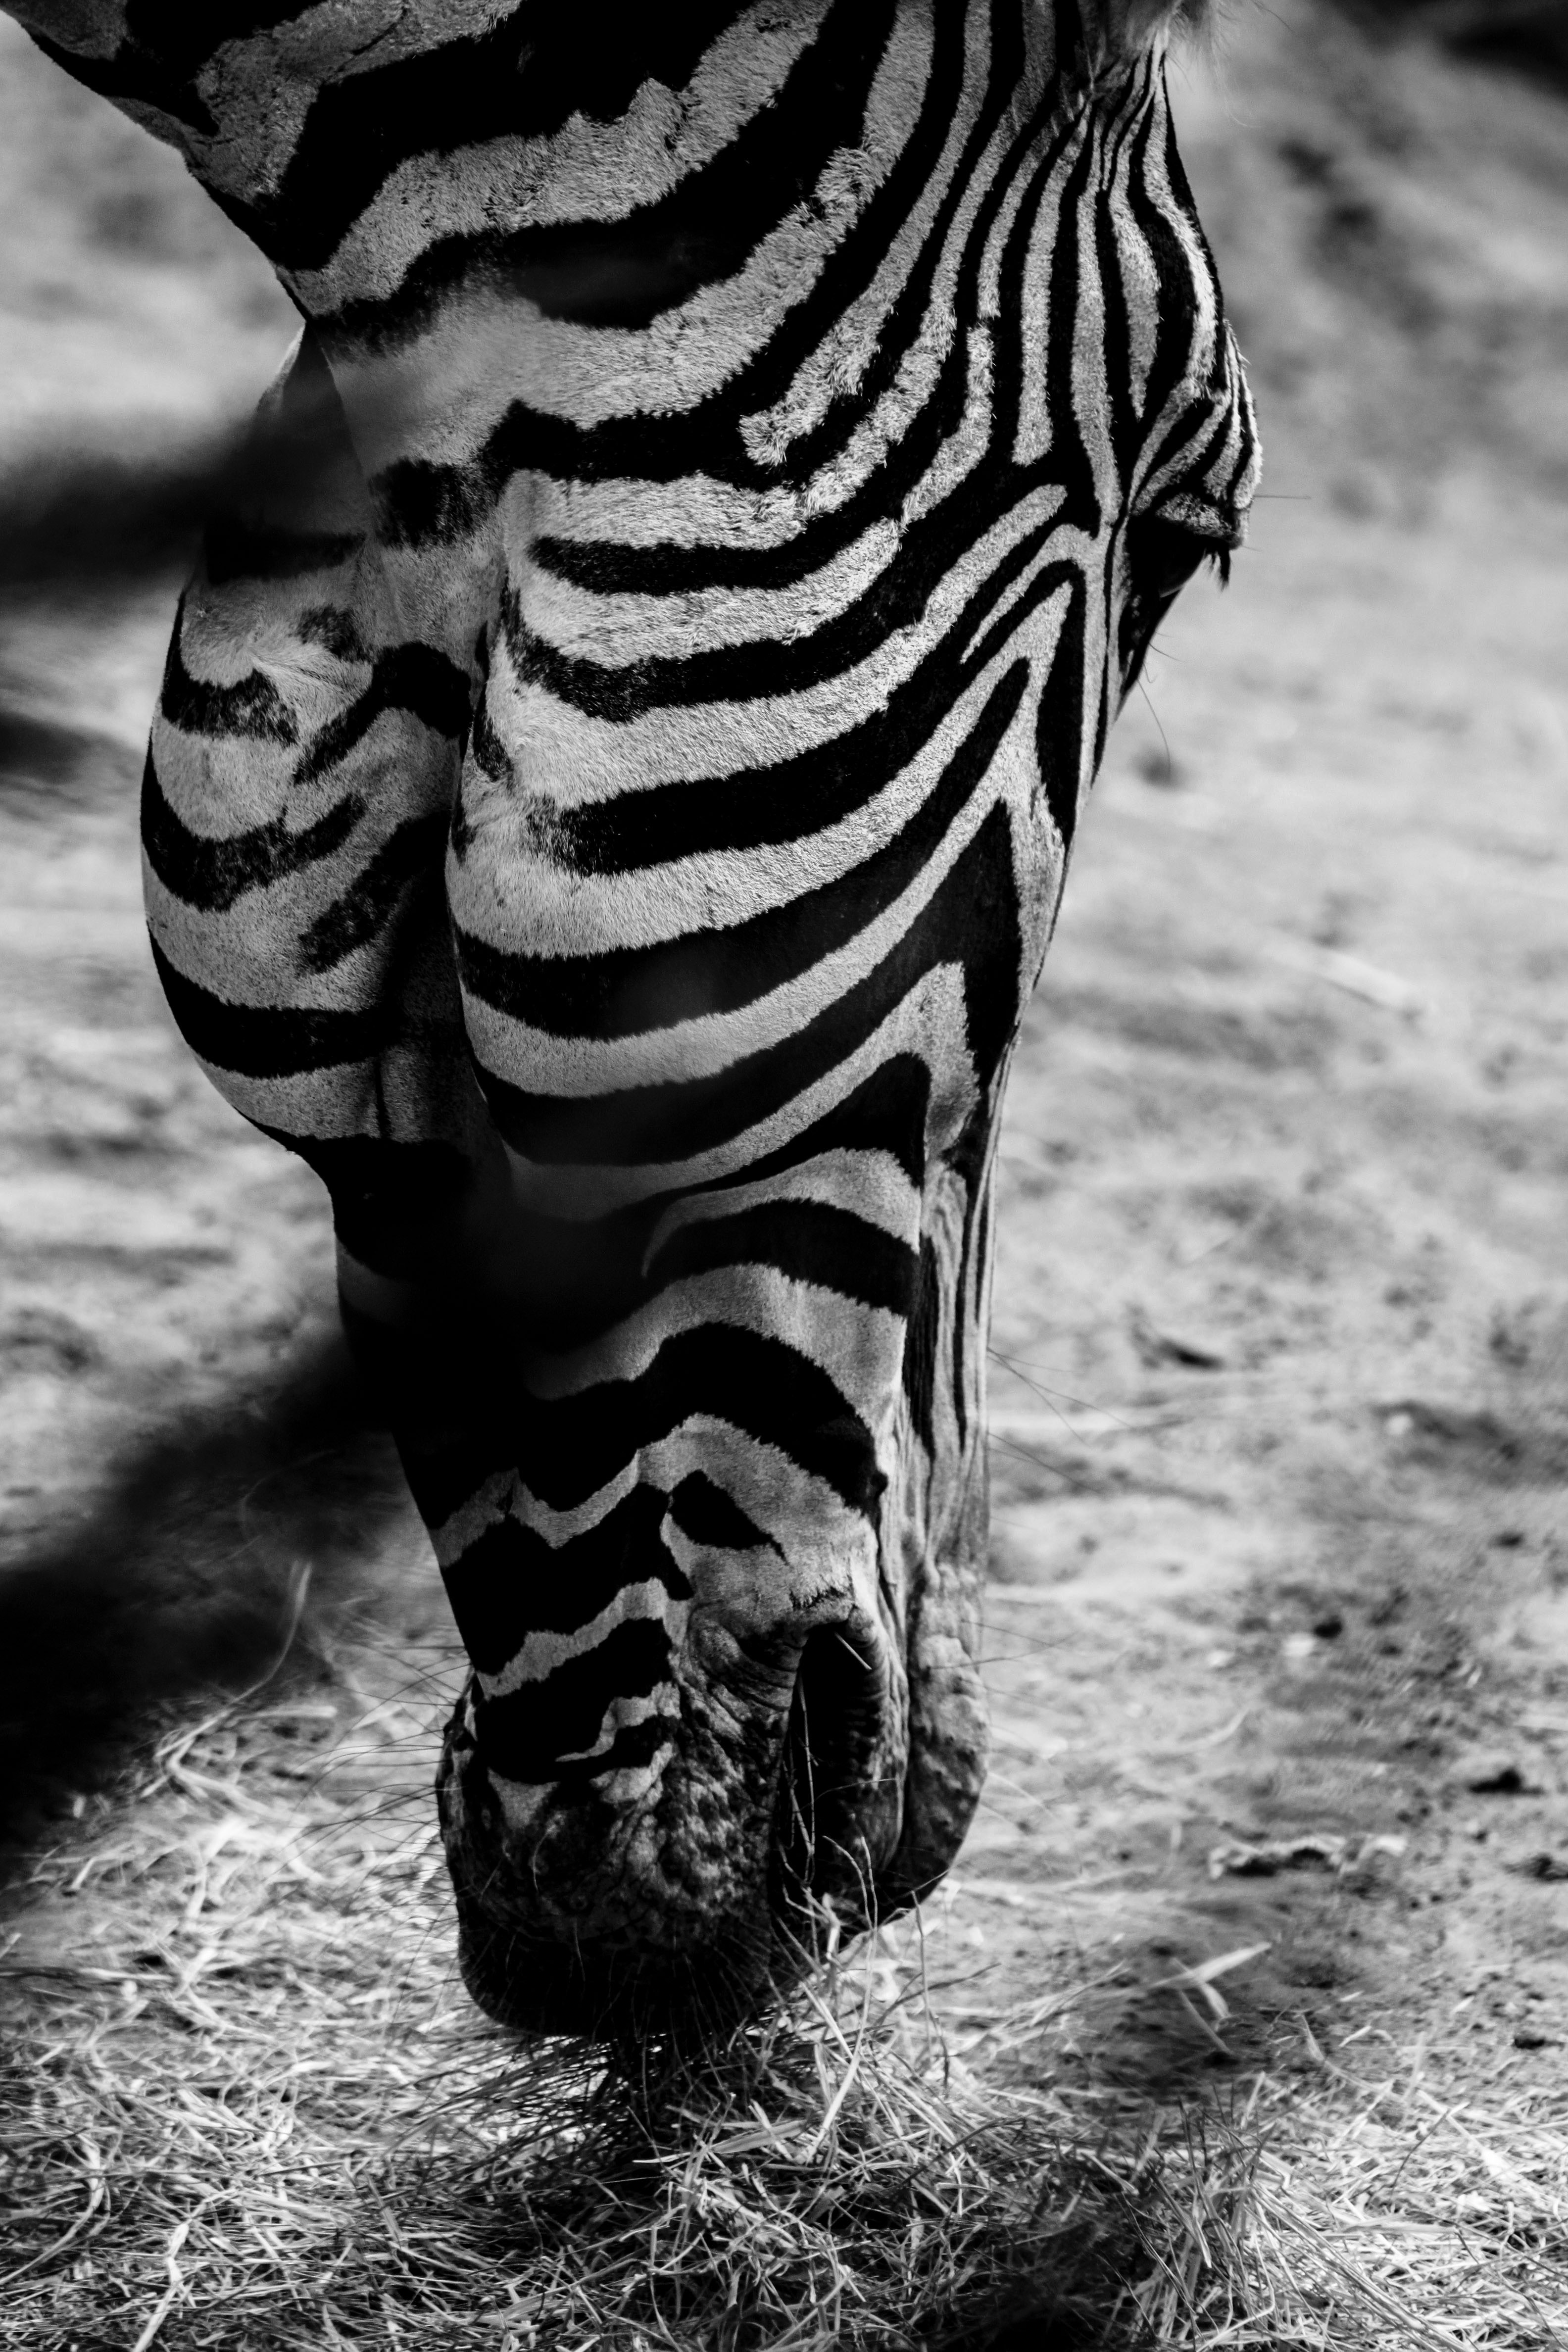 Grayscale photo of zebra's head